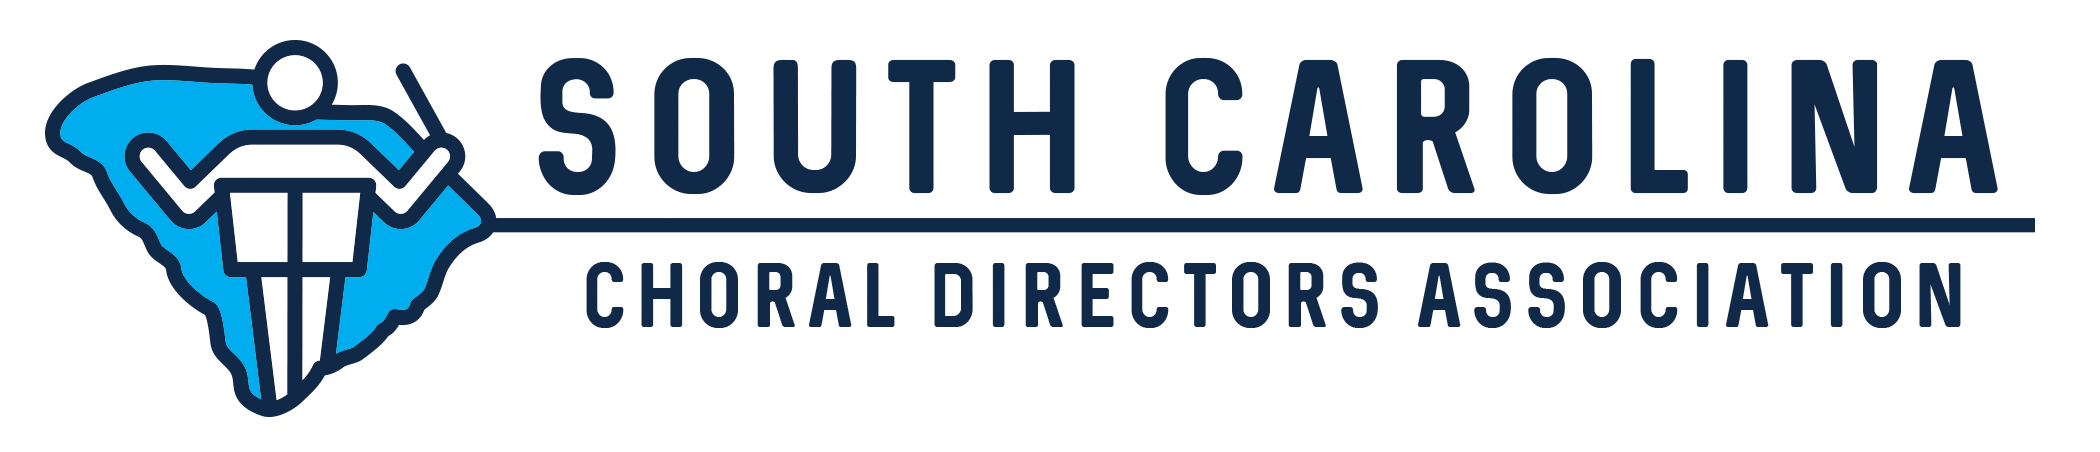 South Carolina American Choral Directors Association